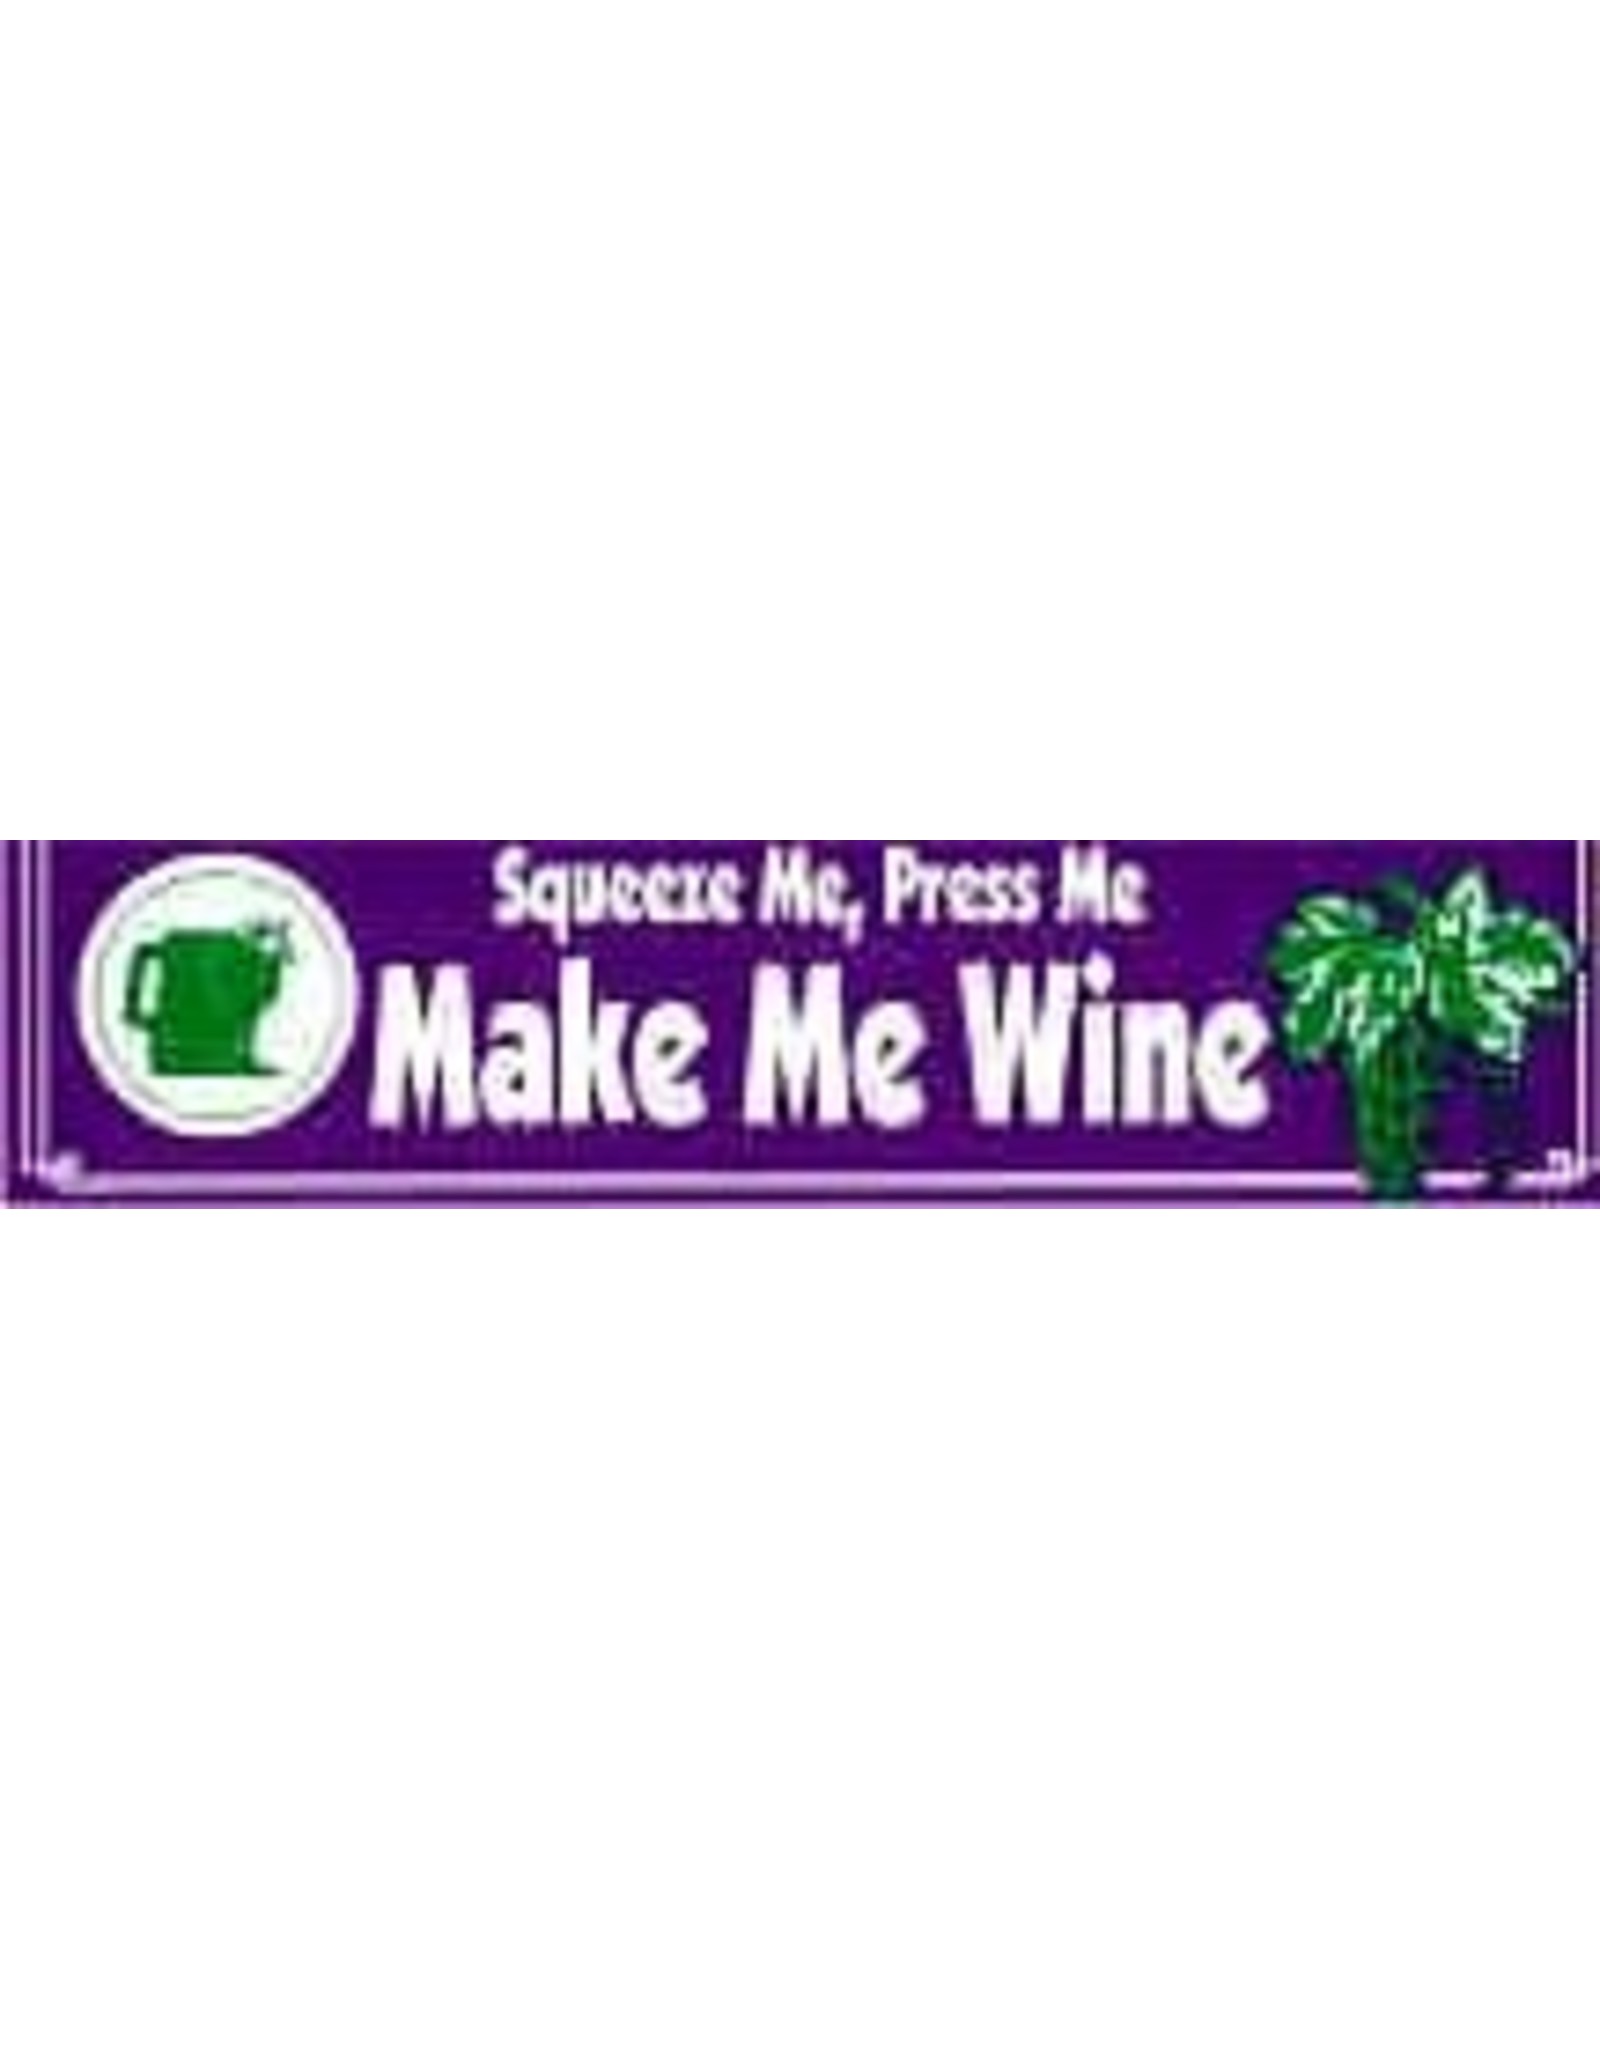 SQUEEZE/PRESS ME MAKE ME WINE